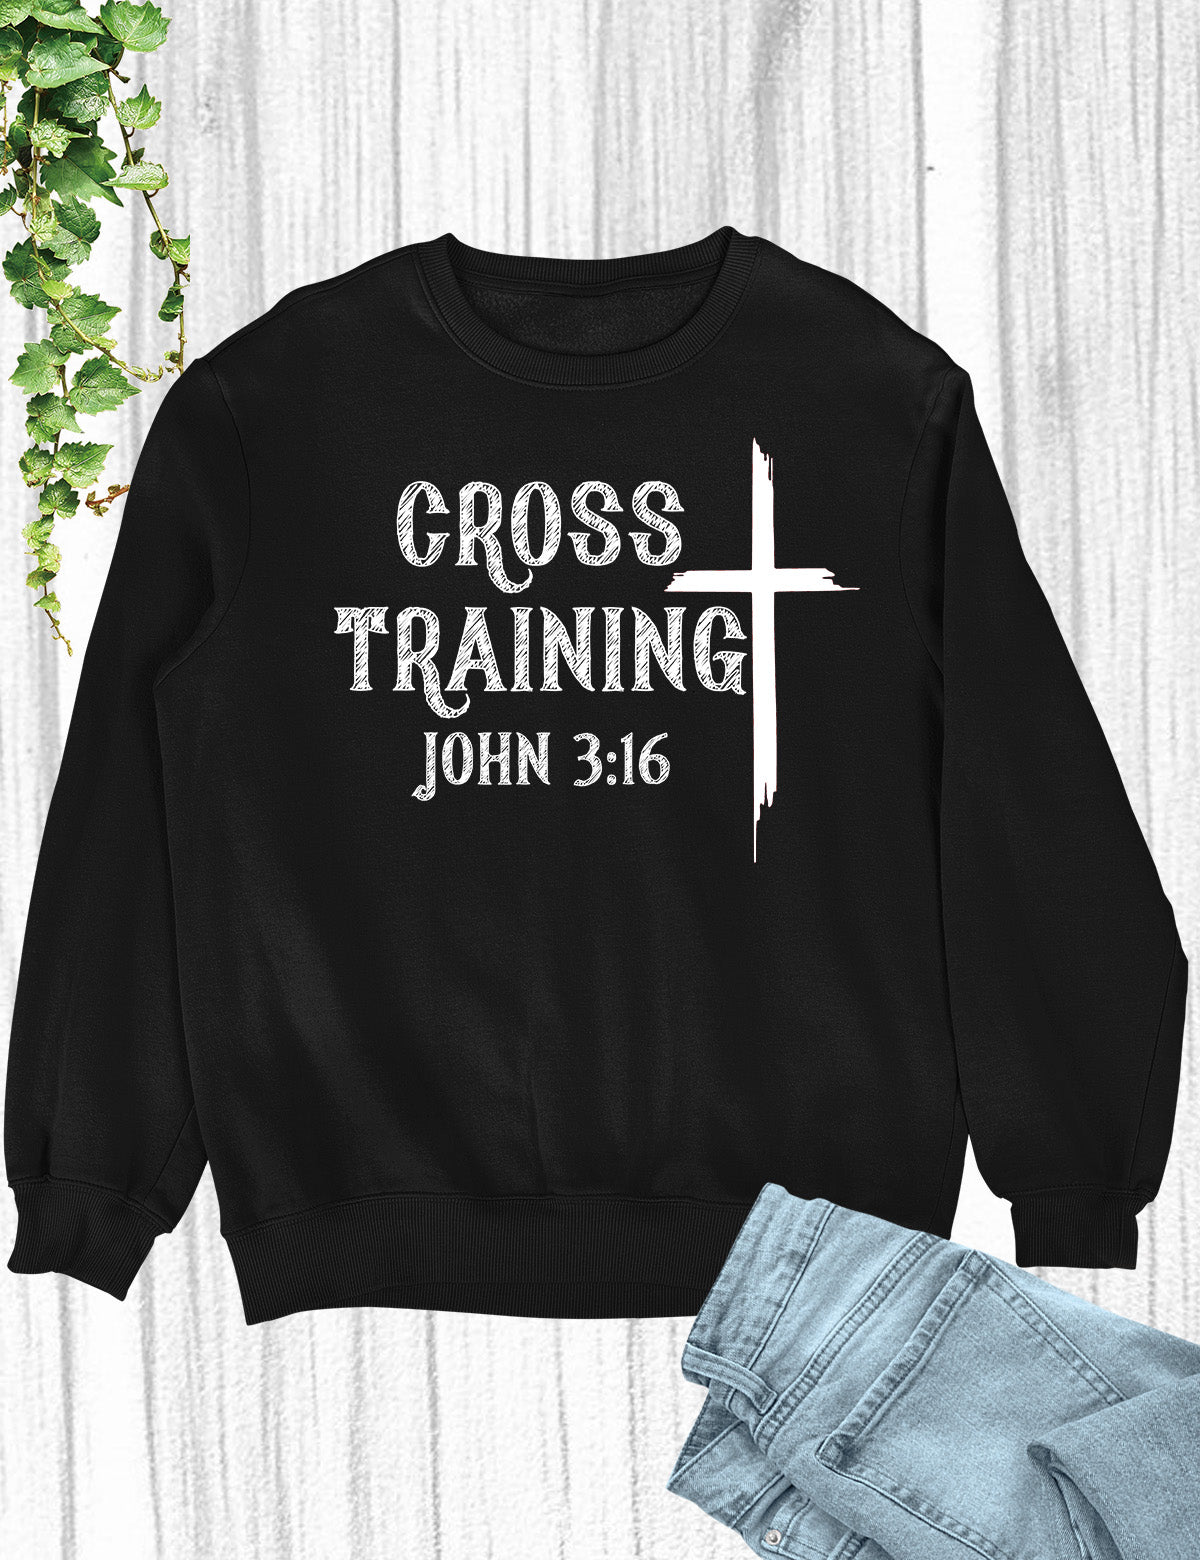 Cross Training John 3:16 Bible Verse Sweaters